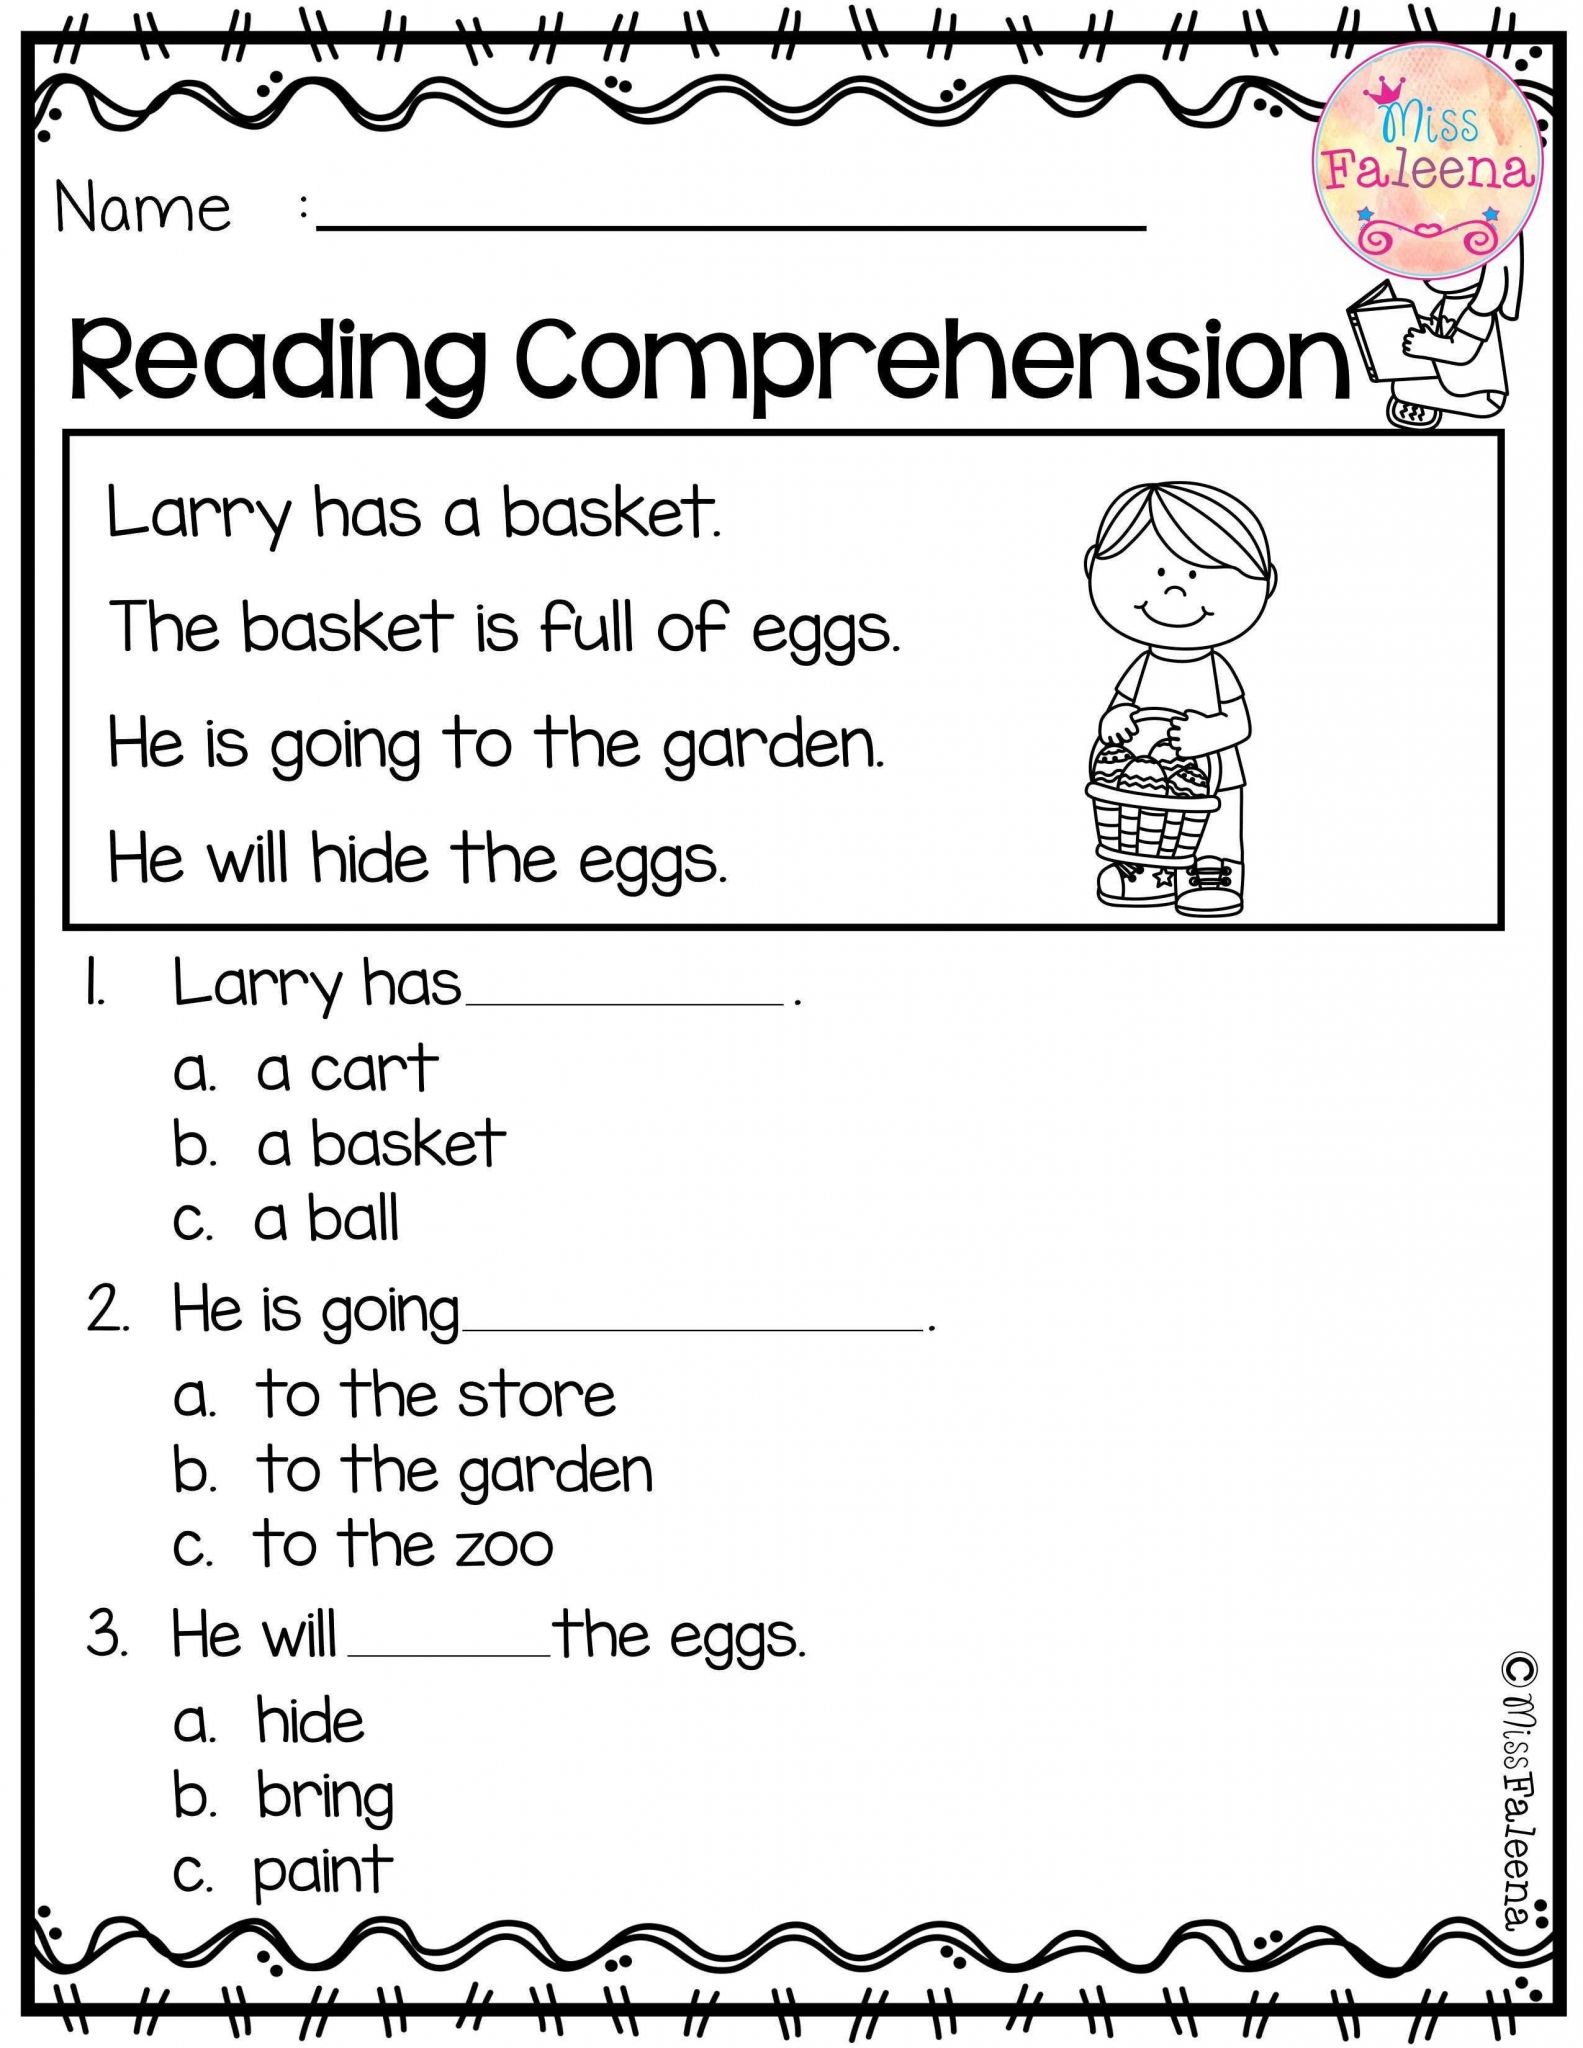 Kindergarten Reading Worksheets Pdf Along with Reading Prehension Worksheets for Kindergarten and First Grade